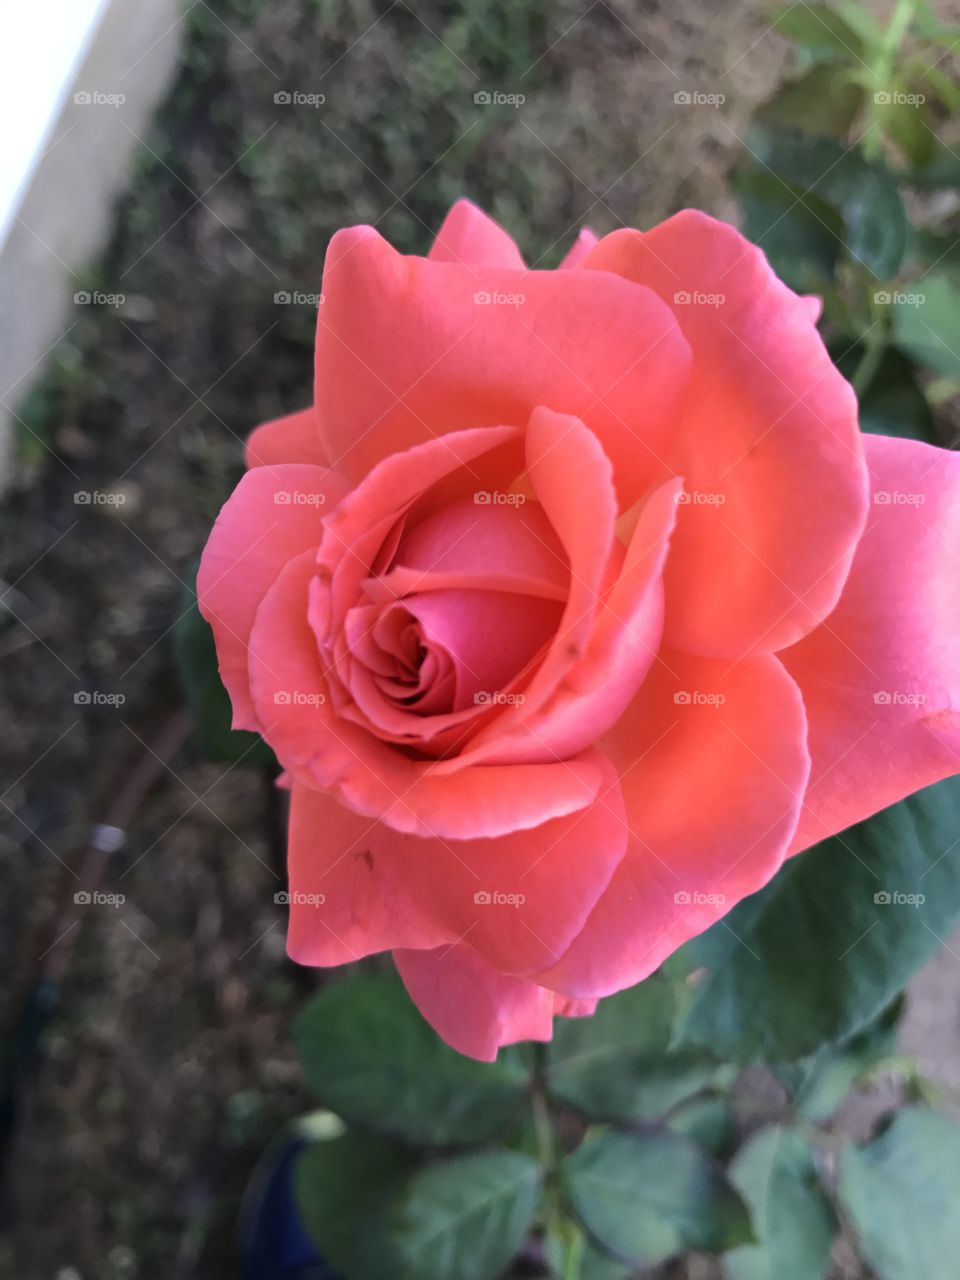 My rose 